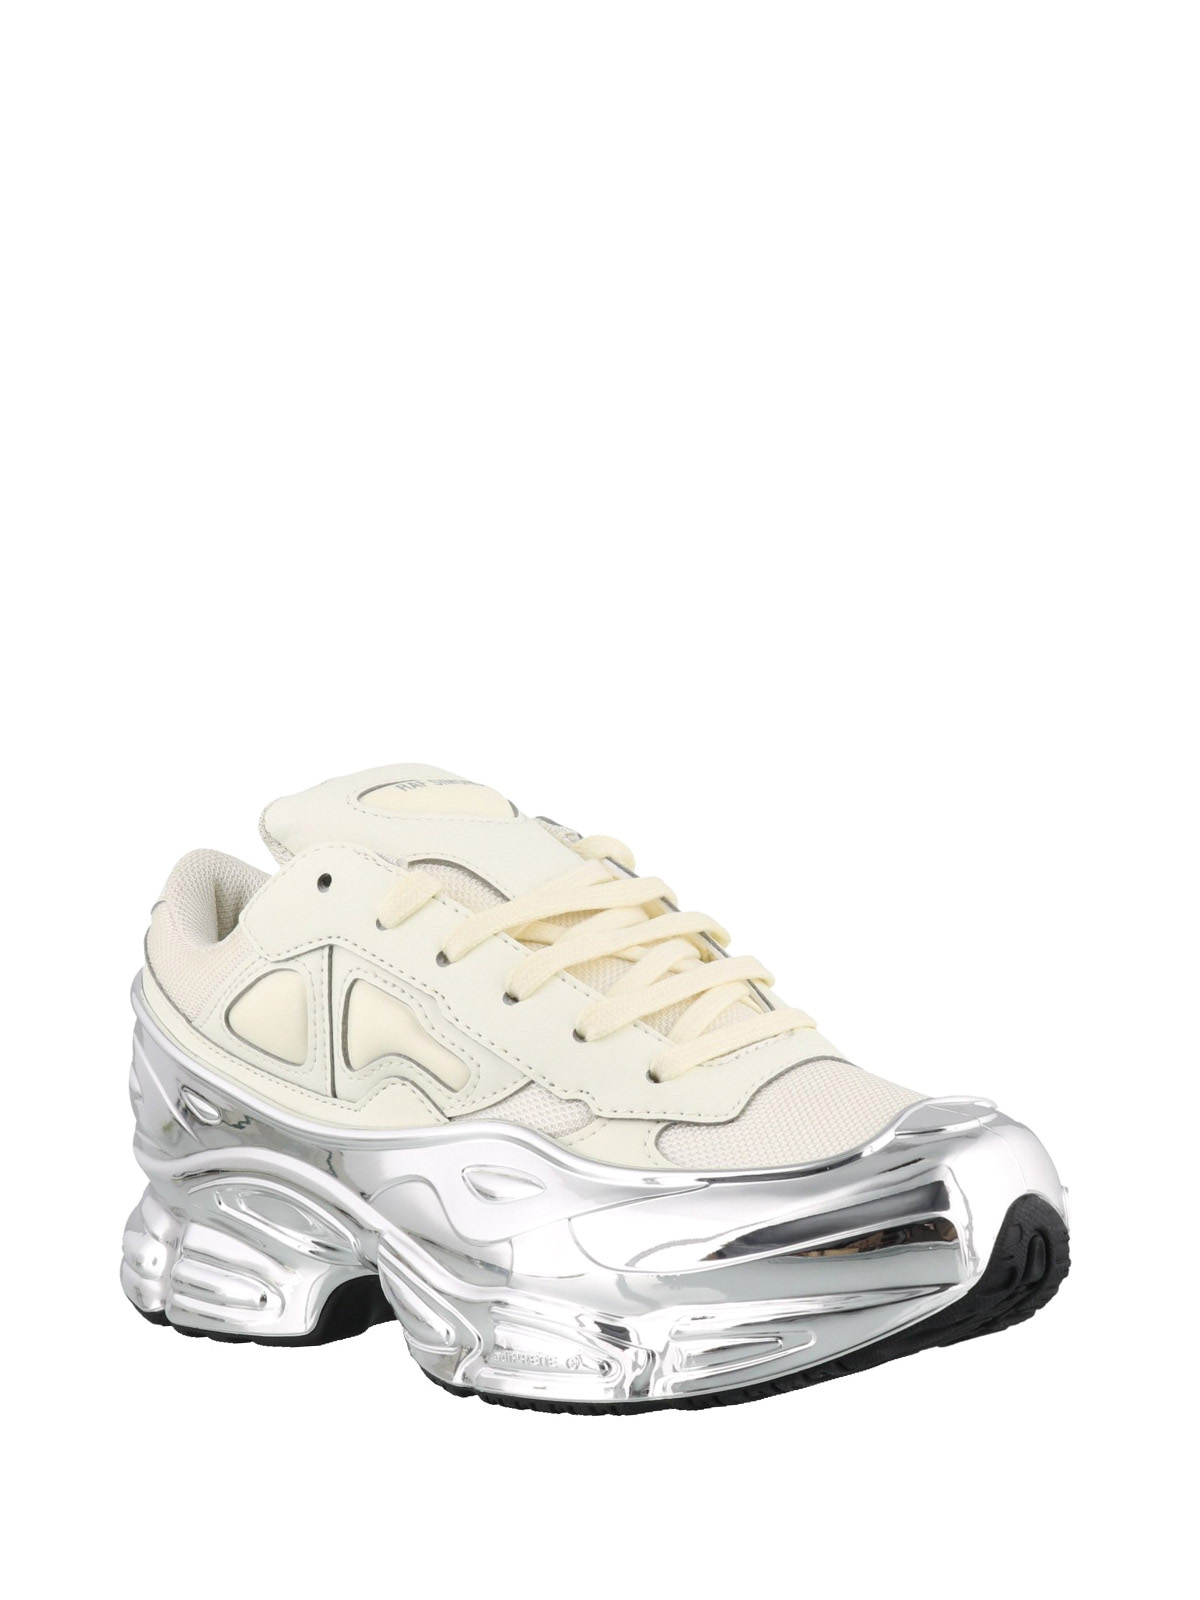 chunky white adidas trainers